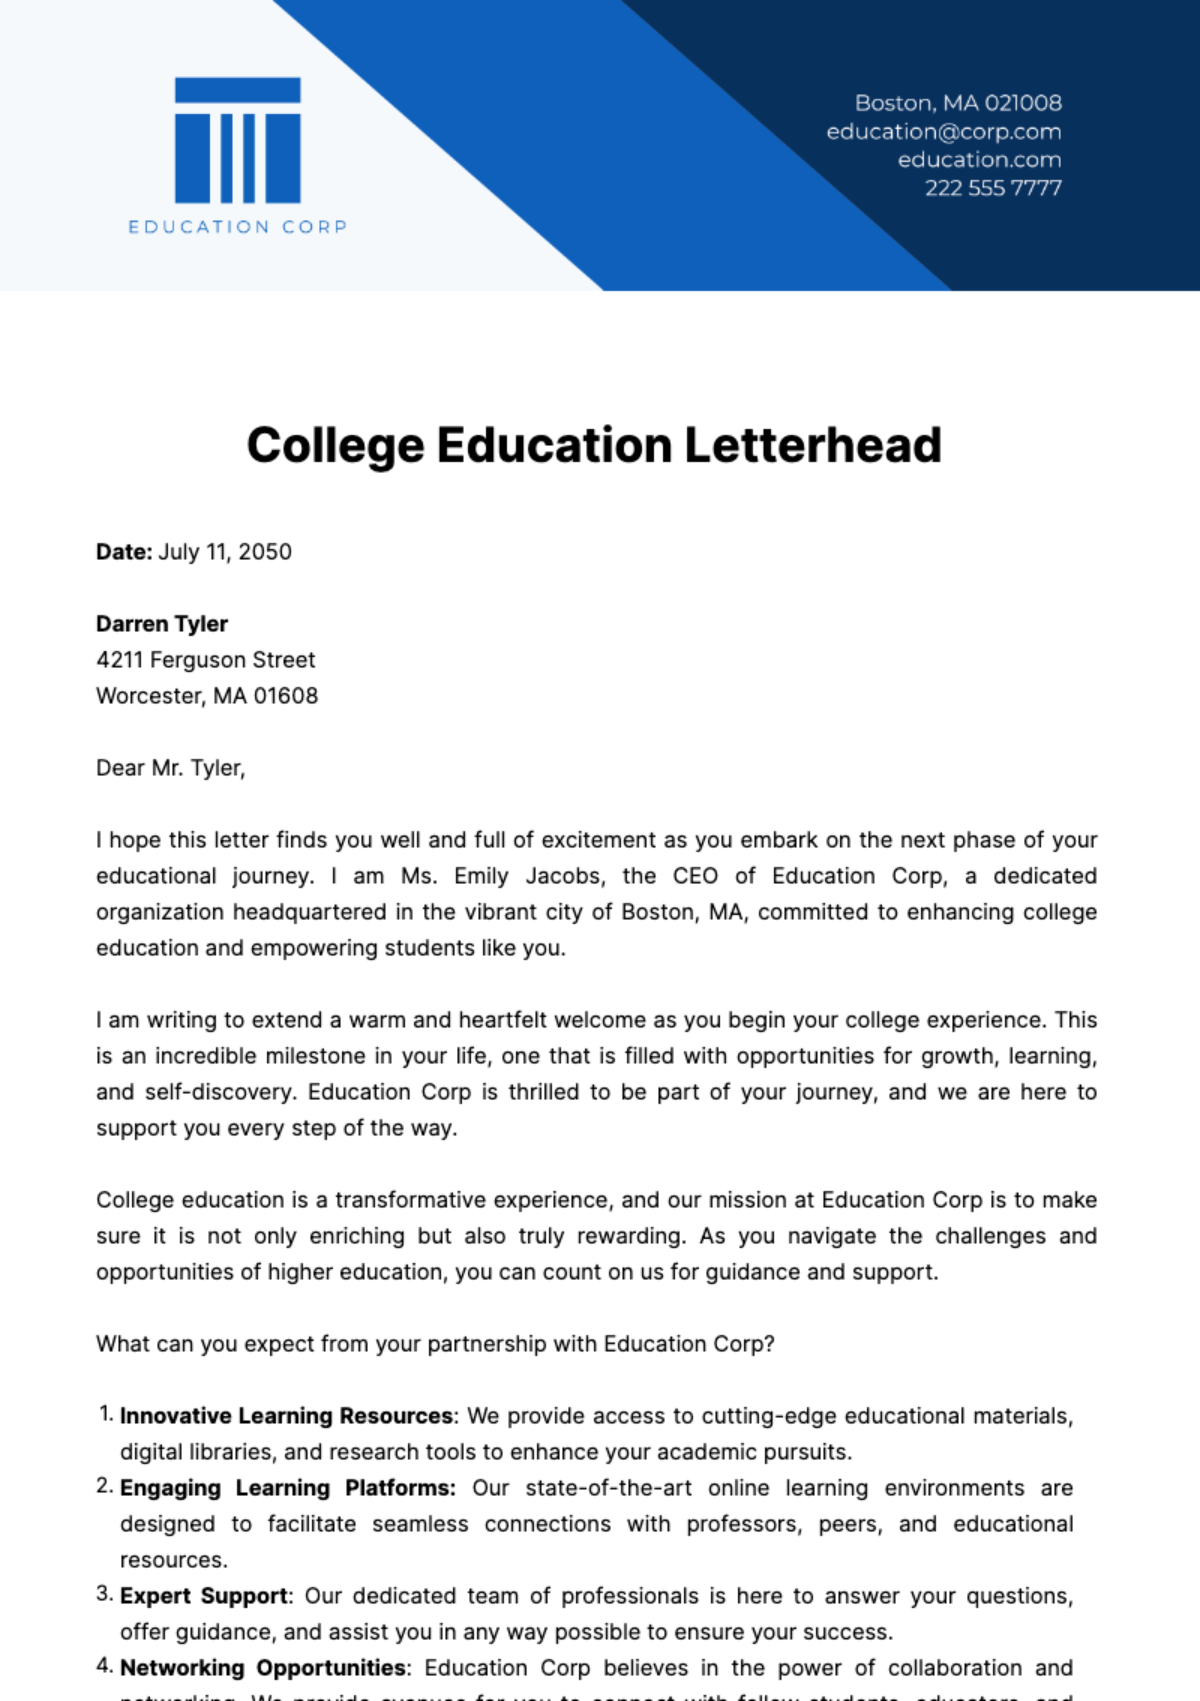 College Education Letterhead Template